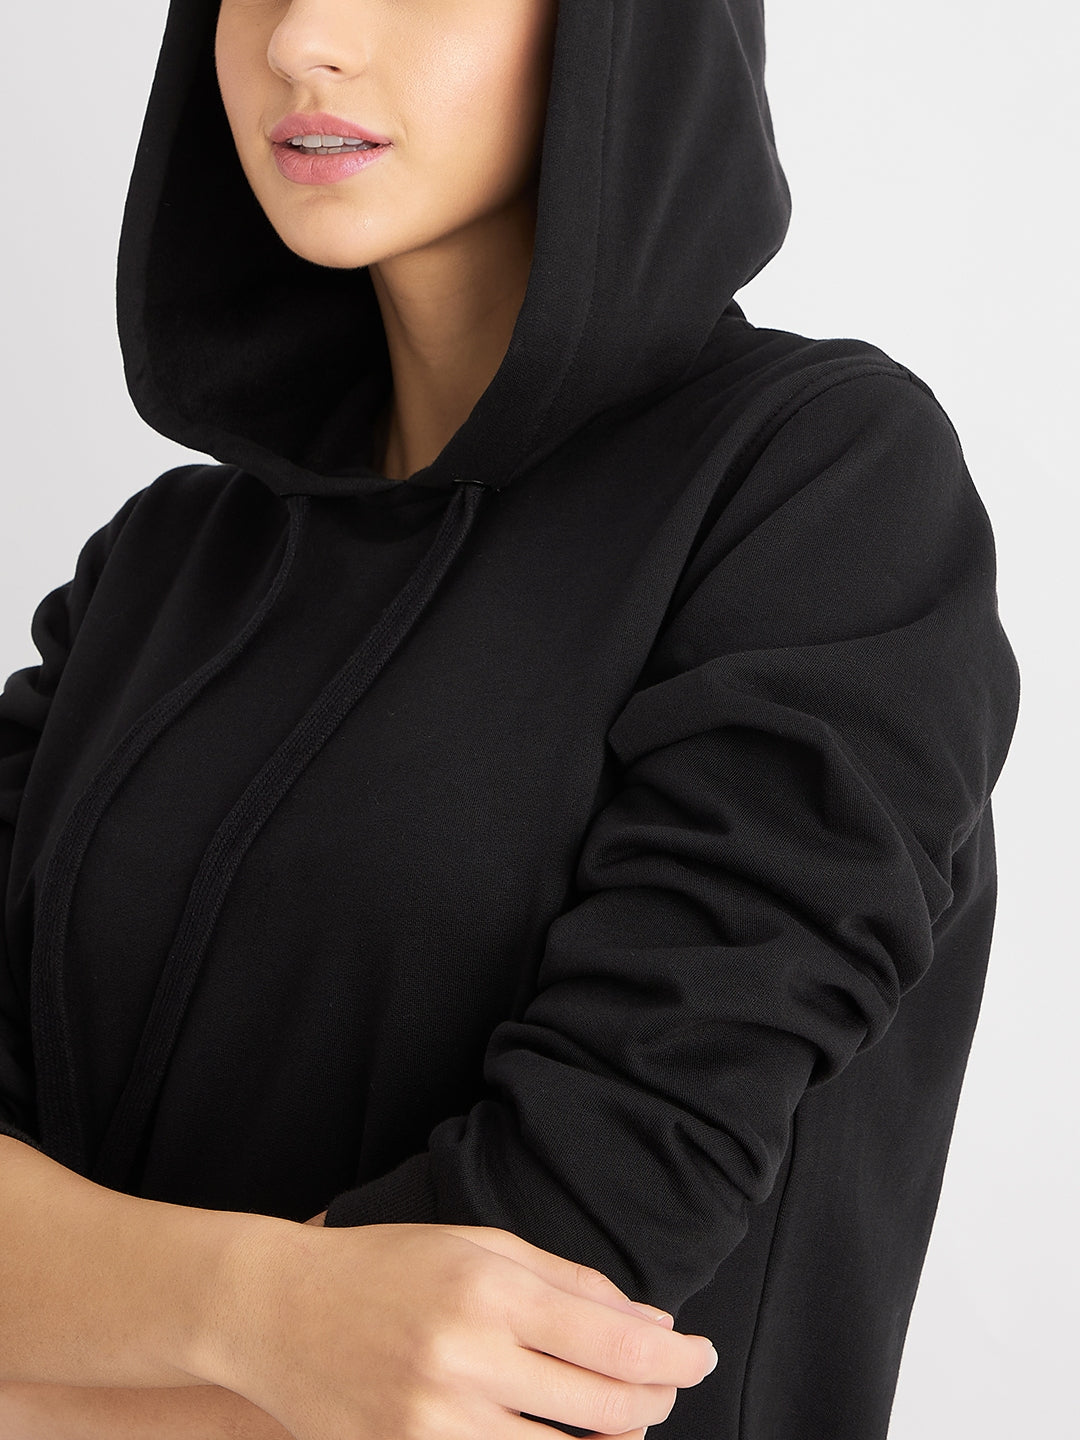 Black Fleece Hooded Sweatshirt Dress